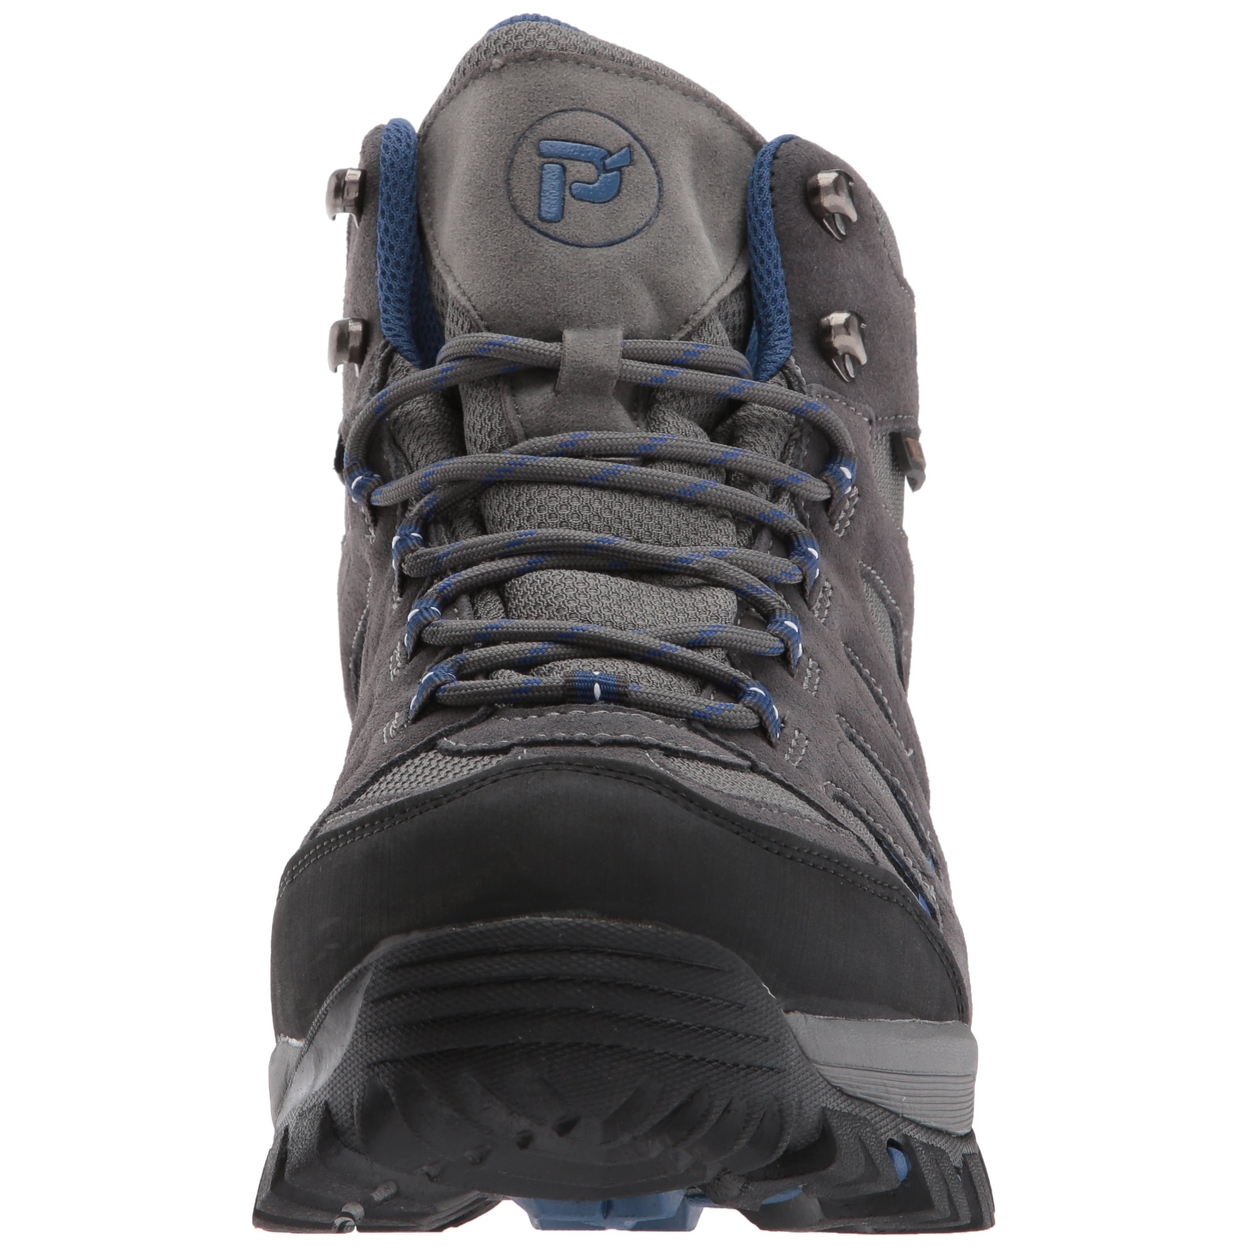 Propet Men's Ridge Walker Hiking Boot Grey/Blue - M3599GRB GREY/BLUE - GREY/BLUE, 8-E